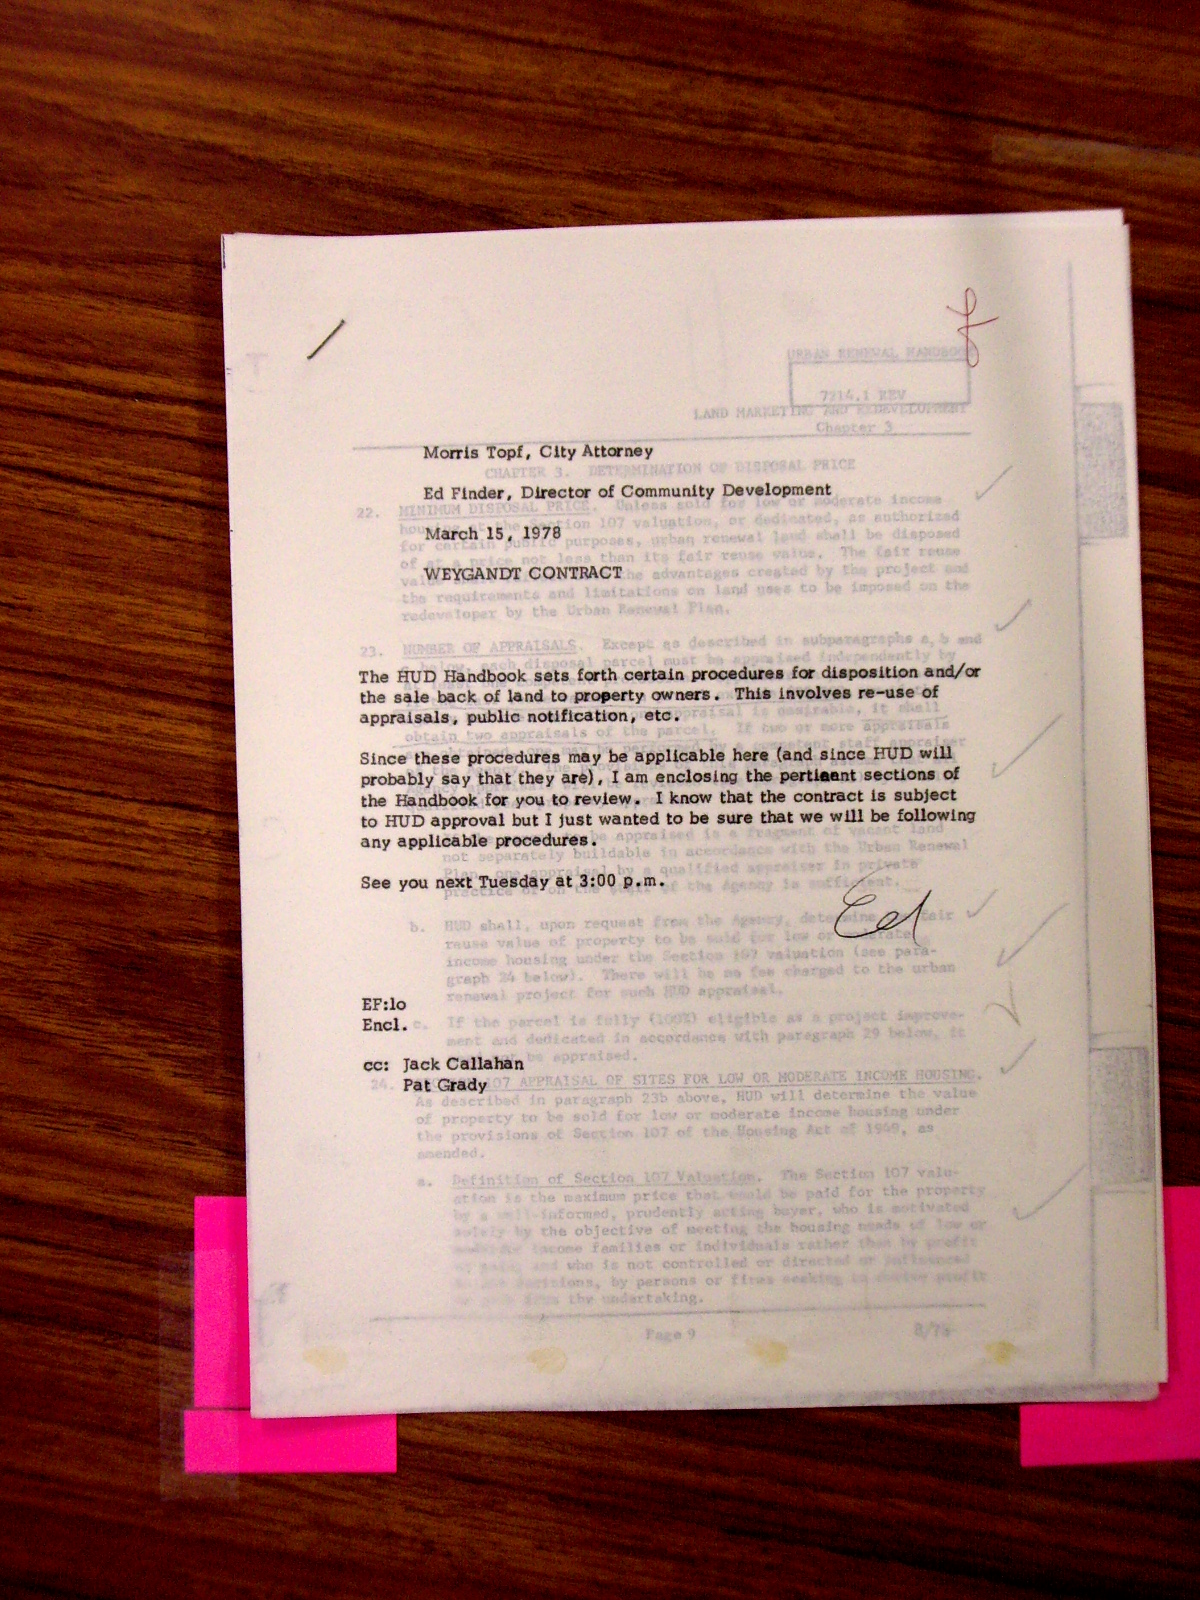 Memorandum to Morris Topf from Ed Finder, enclosing copies of HUD Handbook pages